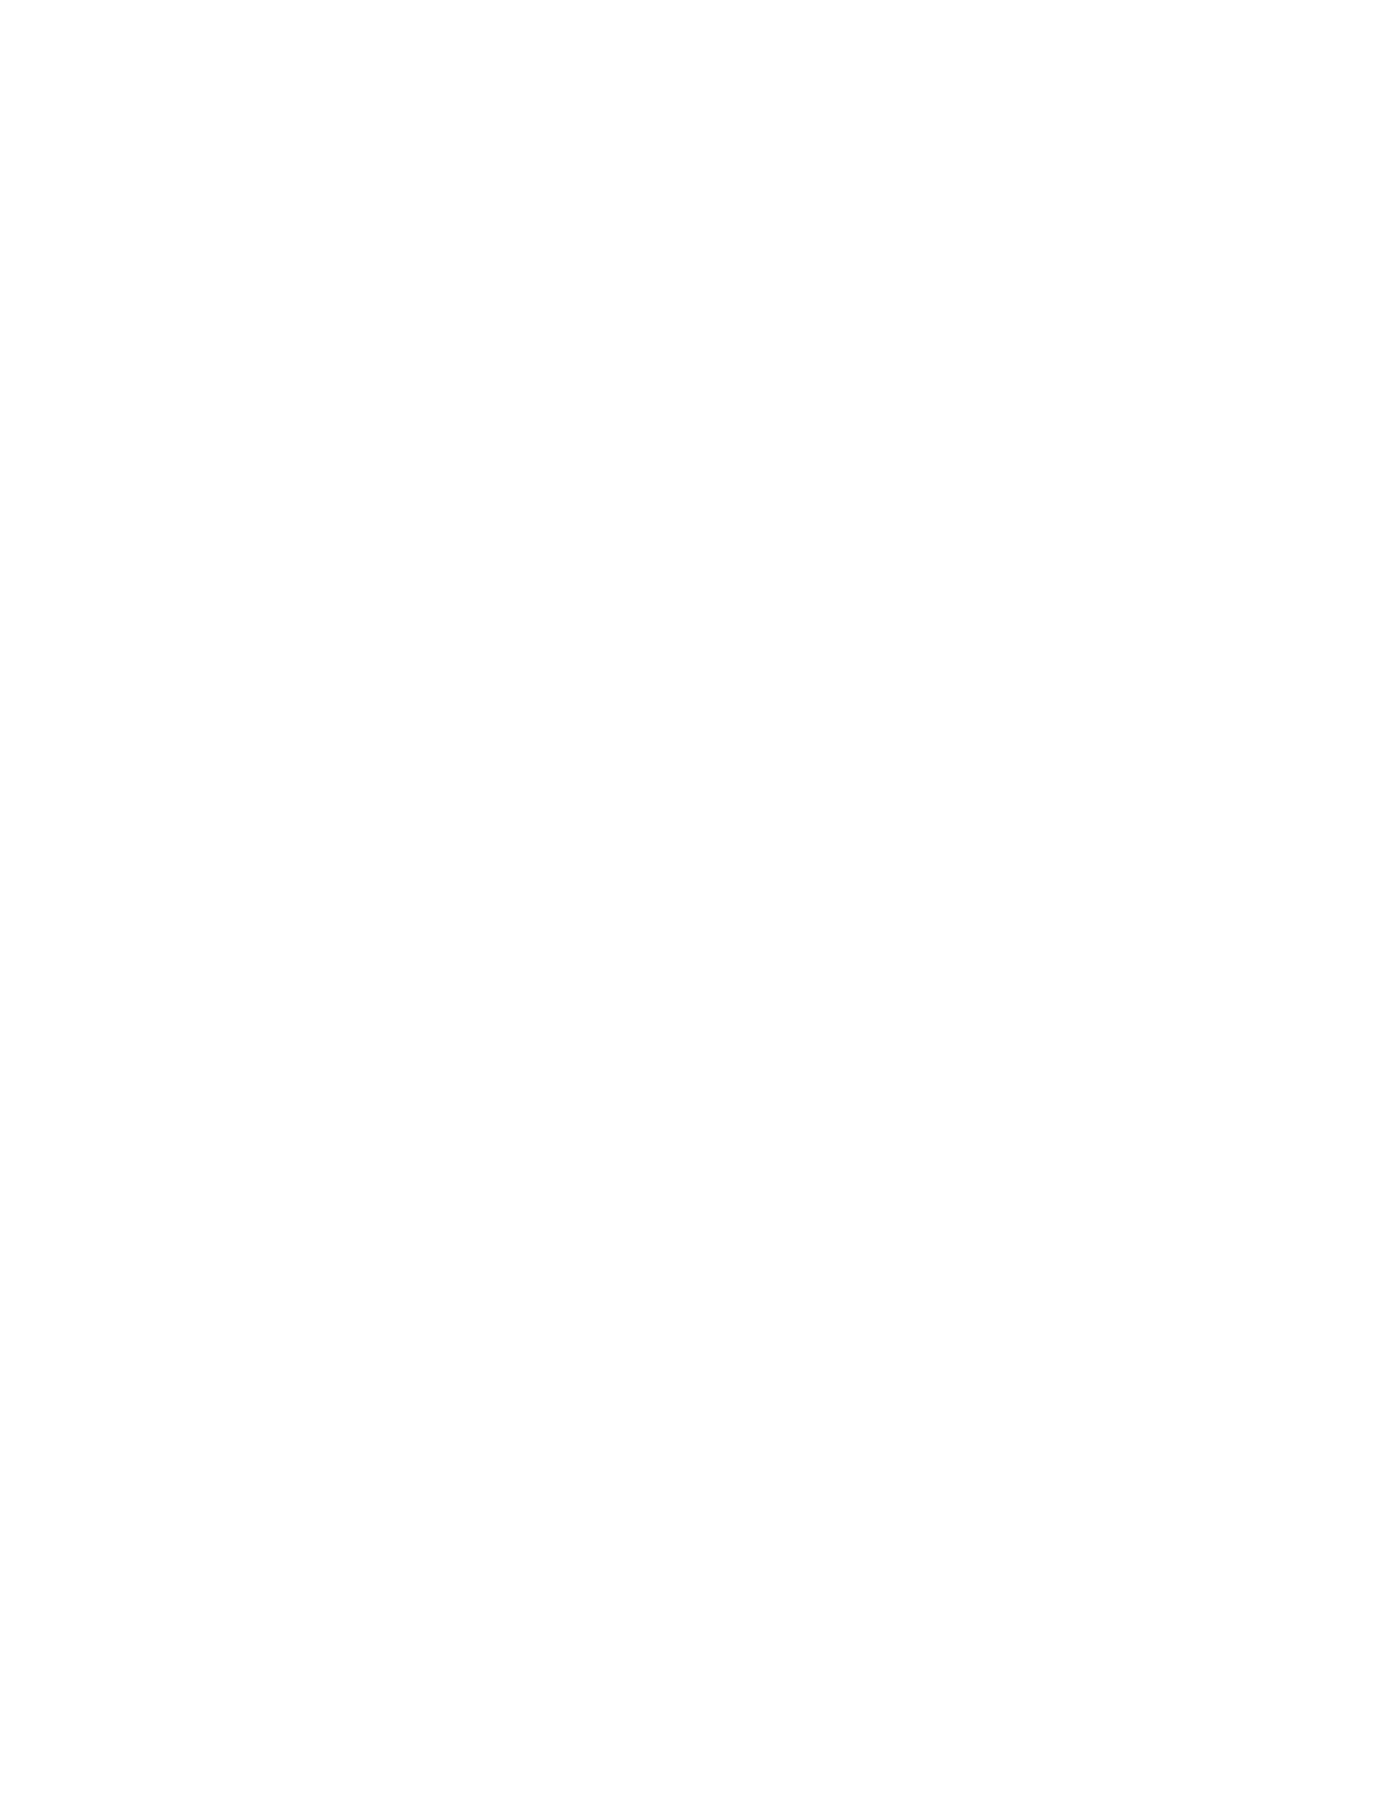 UNRWA LOGO